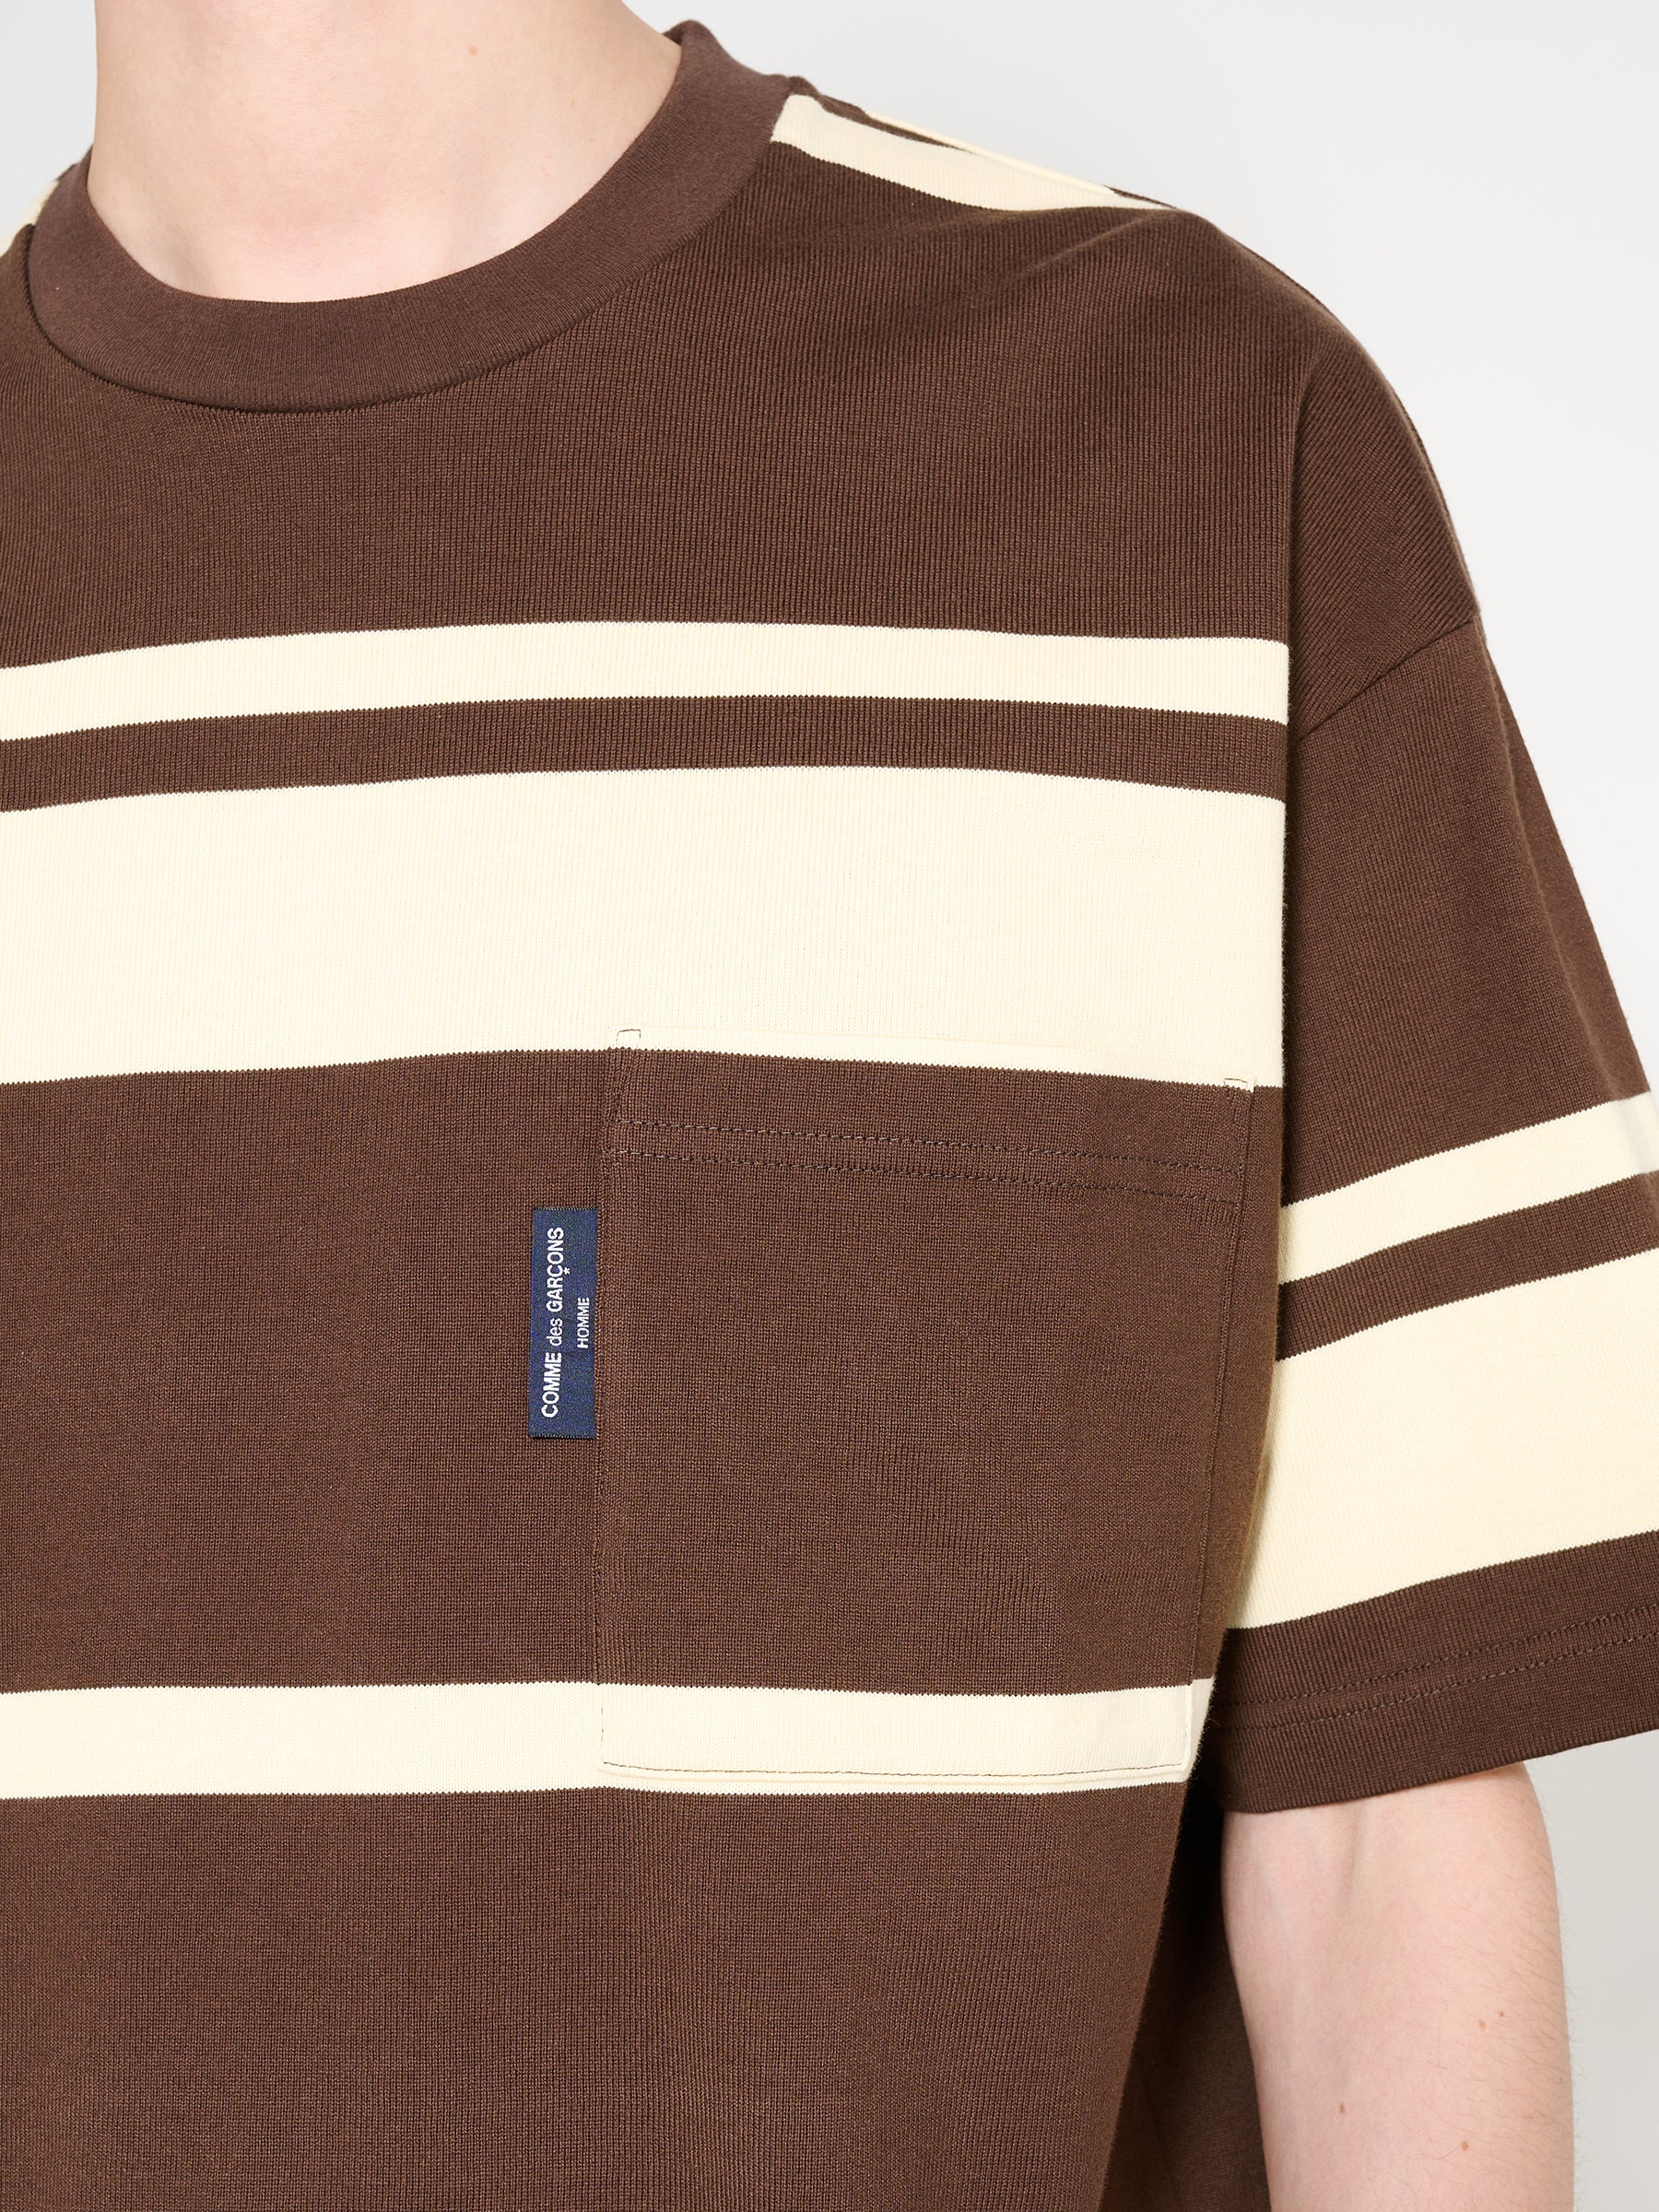 Comme des Garçons Homme Striped T-shirt Brown / Cream